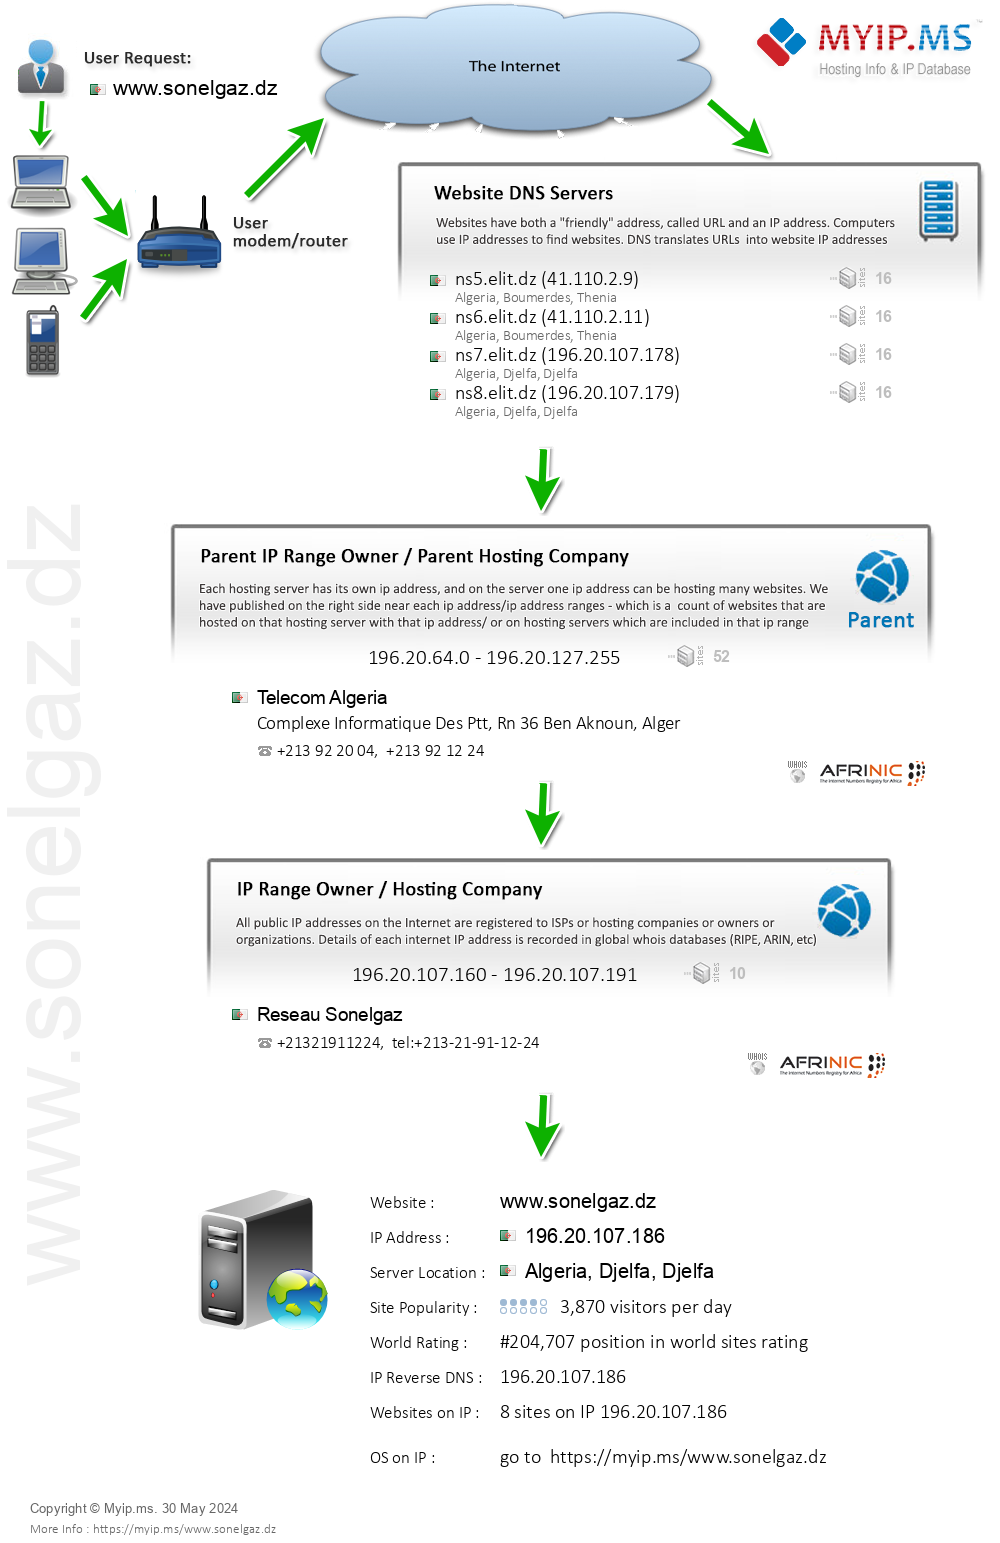 Sonelgaz.dz - Website Hosting Visual IP Diagram